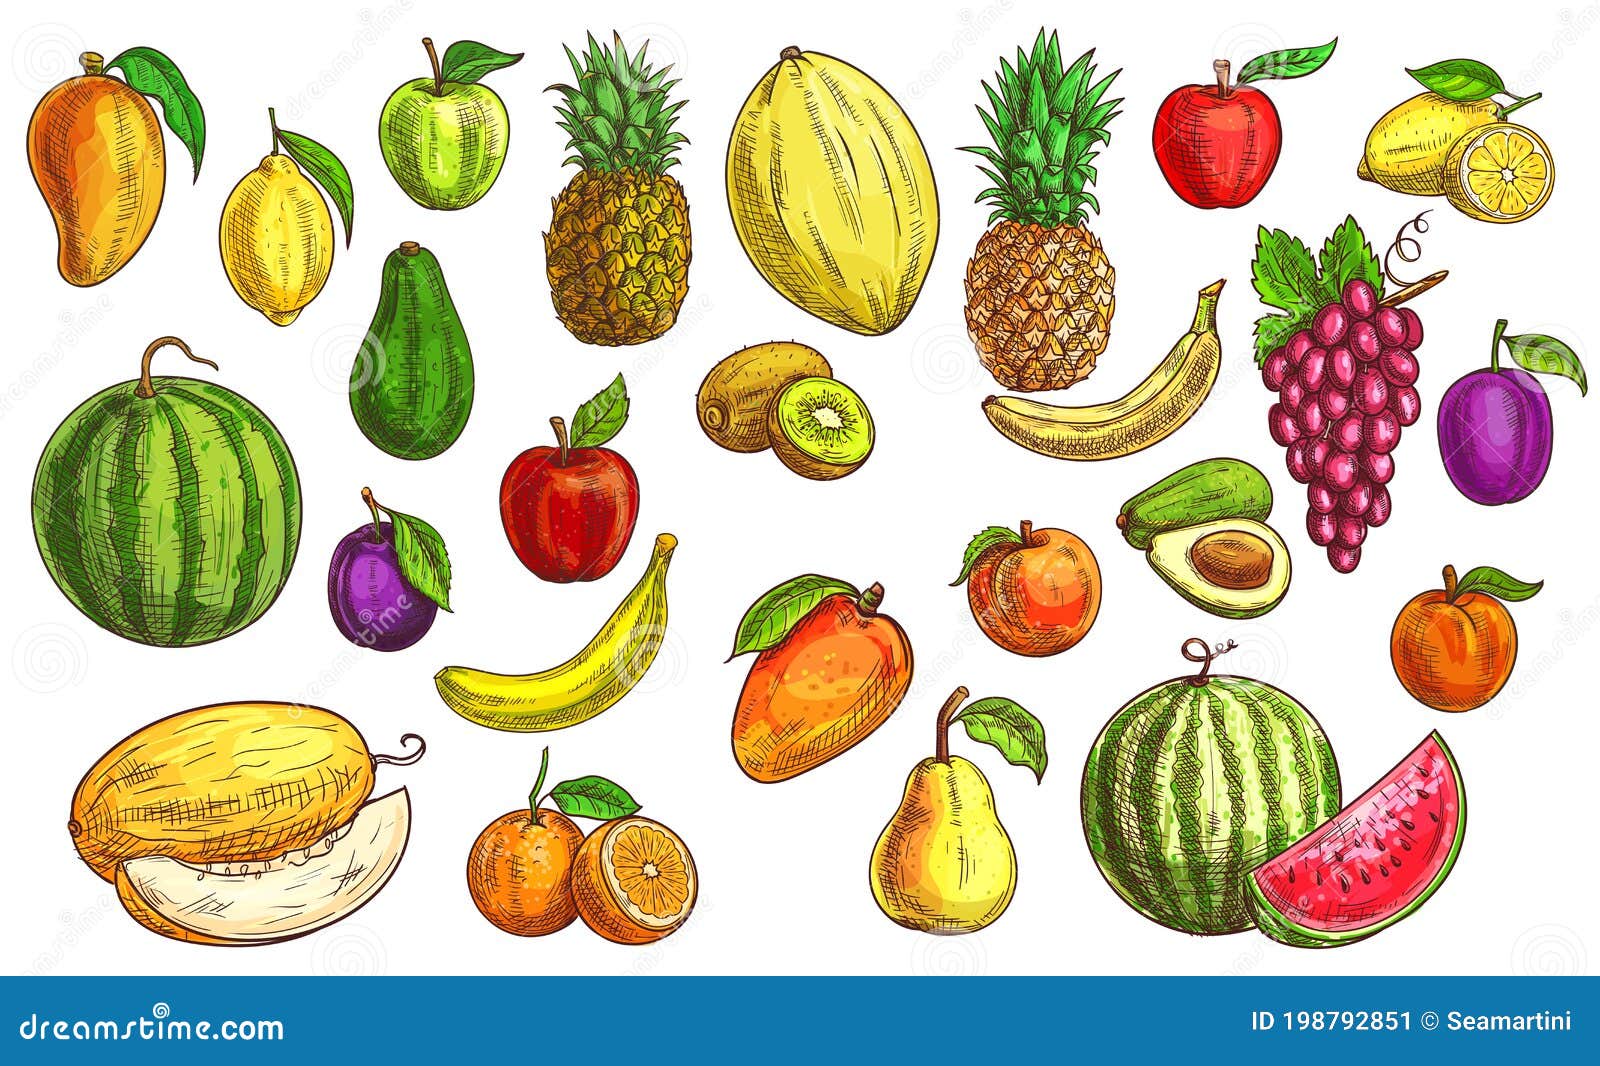 Premium Vector | Fruits hand drawn with line art set